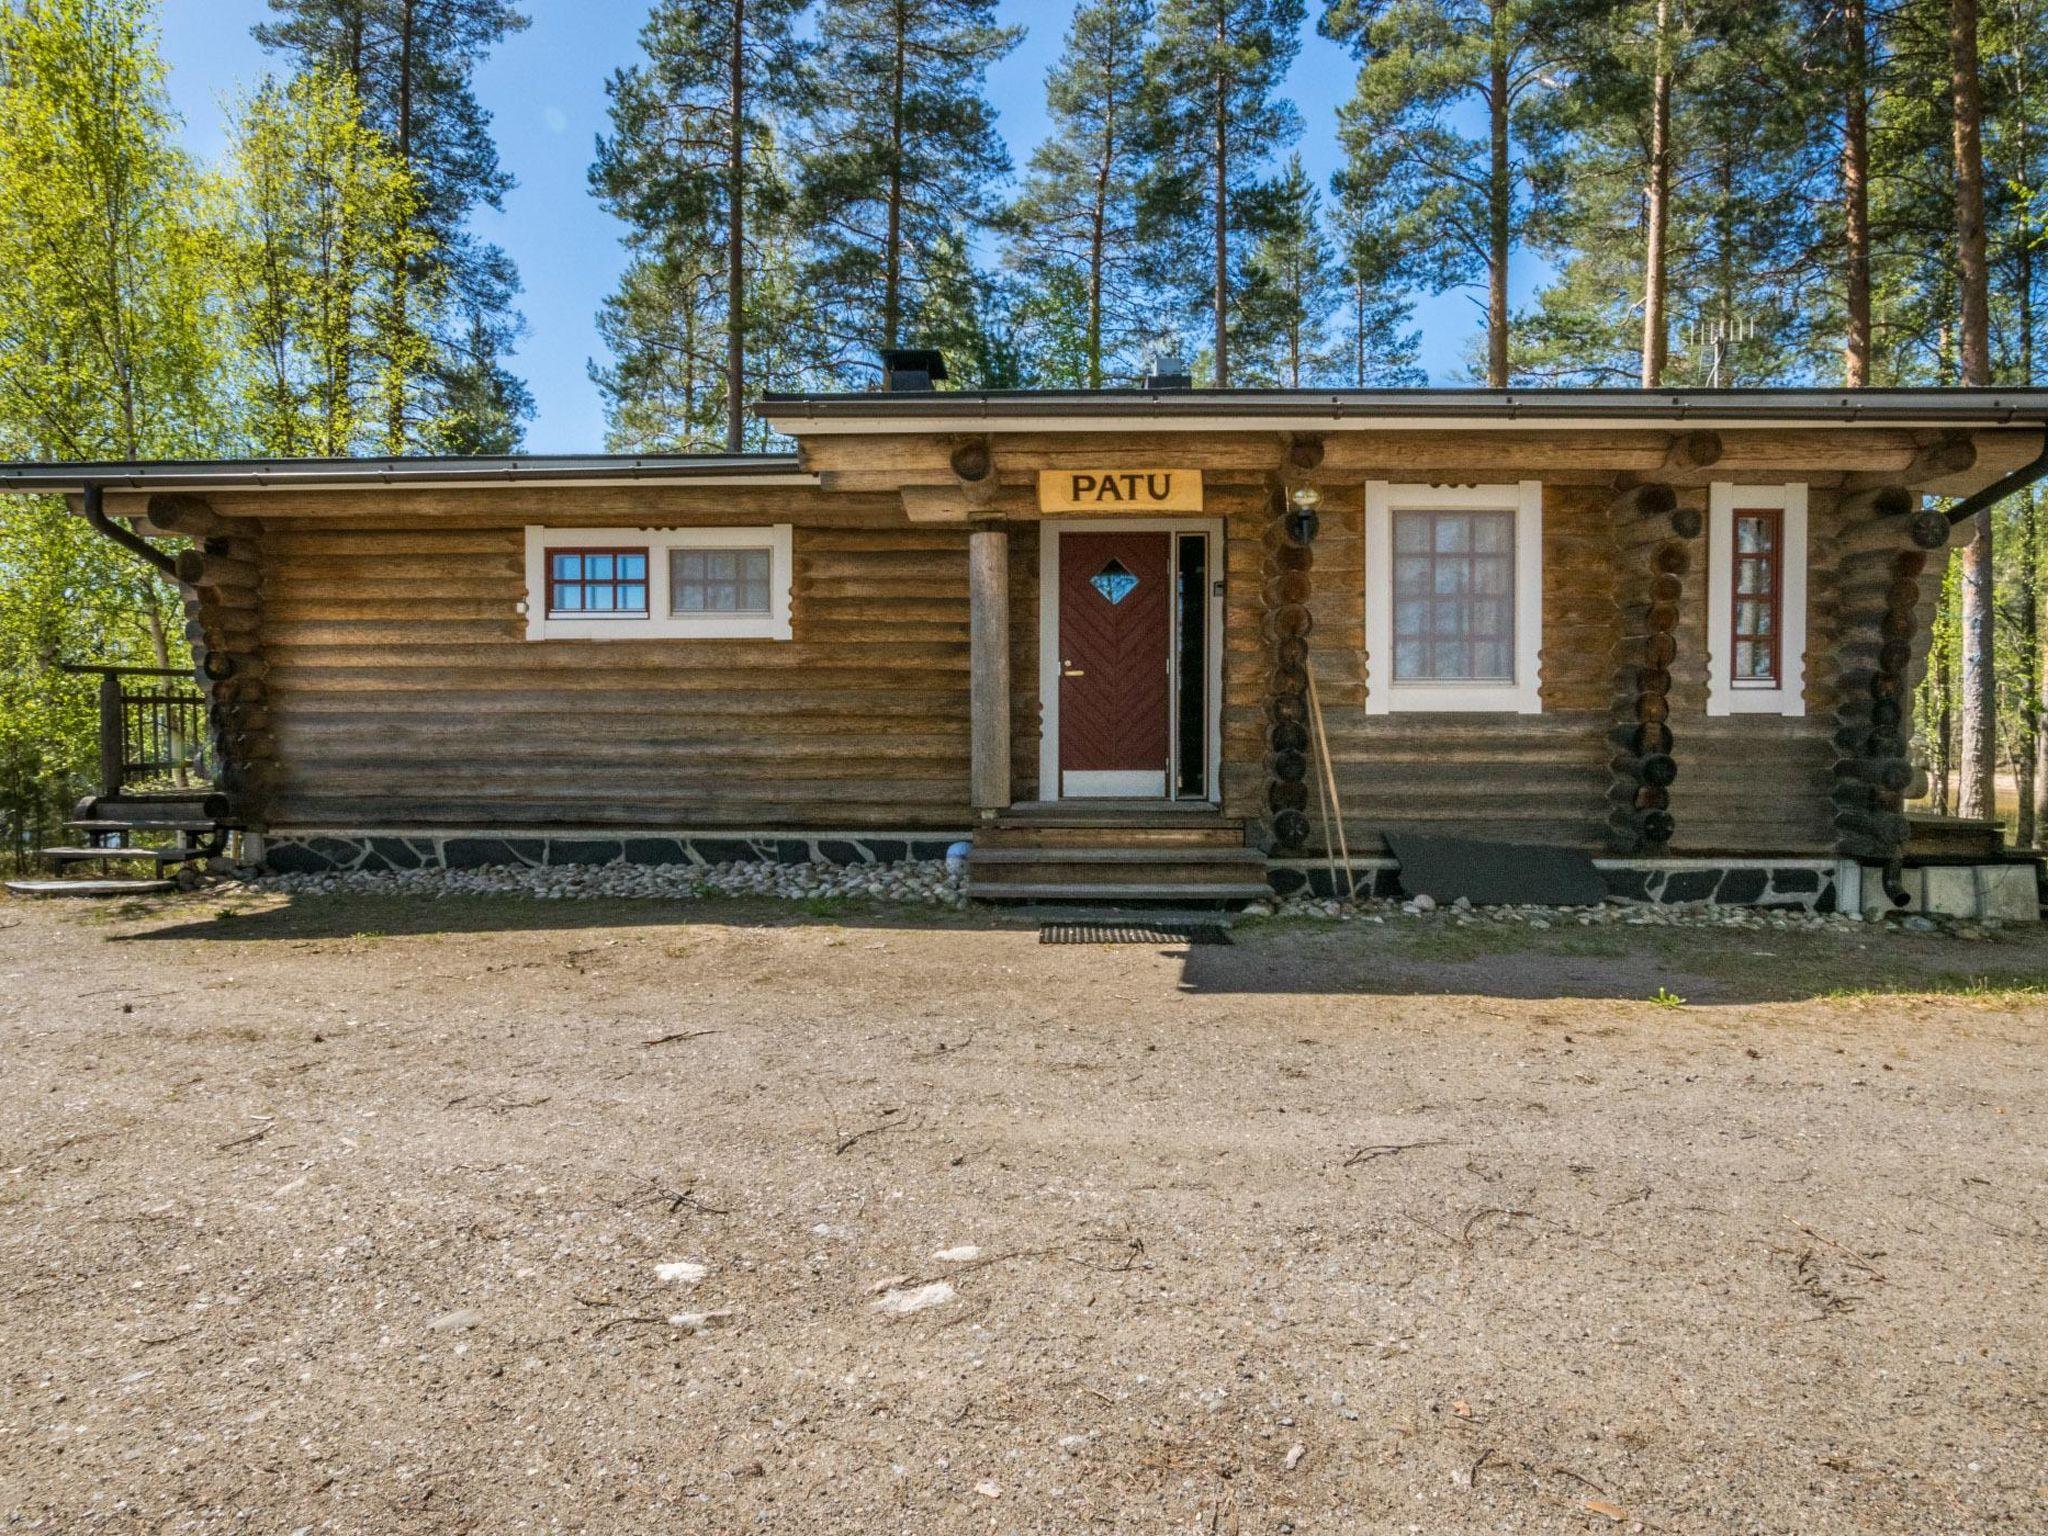 Photo 3 - 1 bedroom House in Savonlinna with sauna